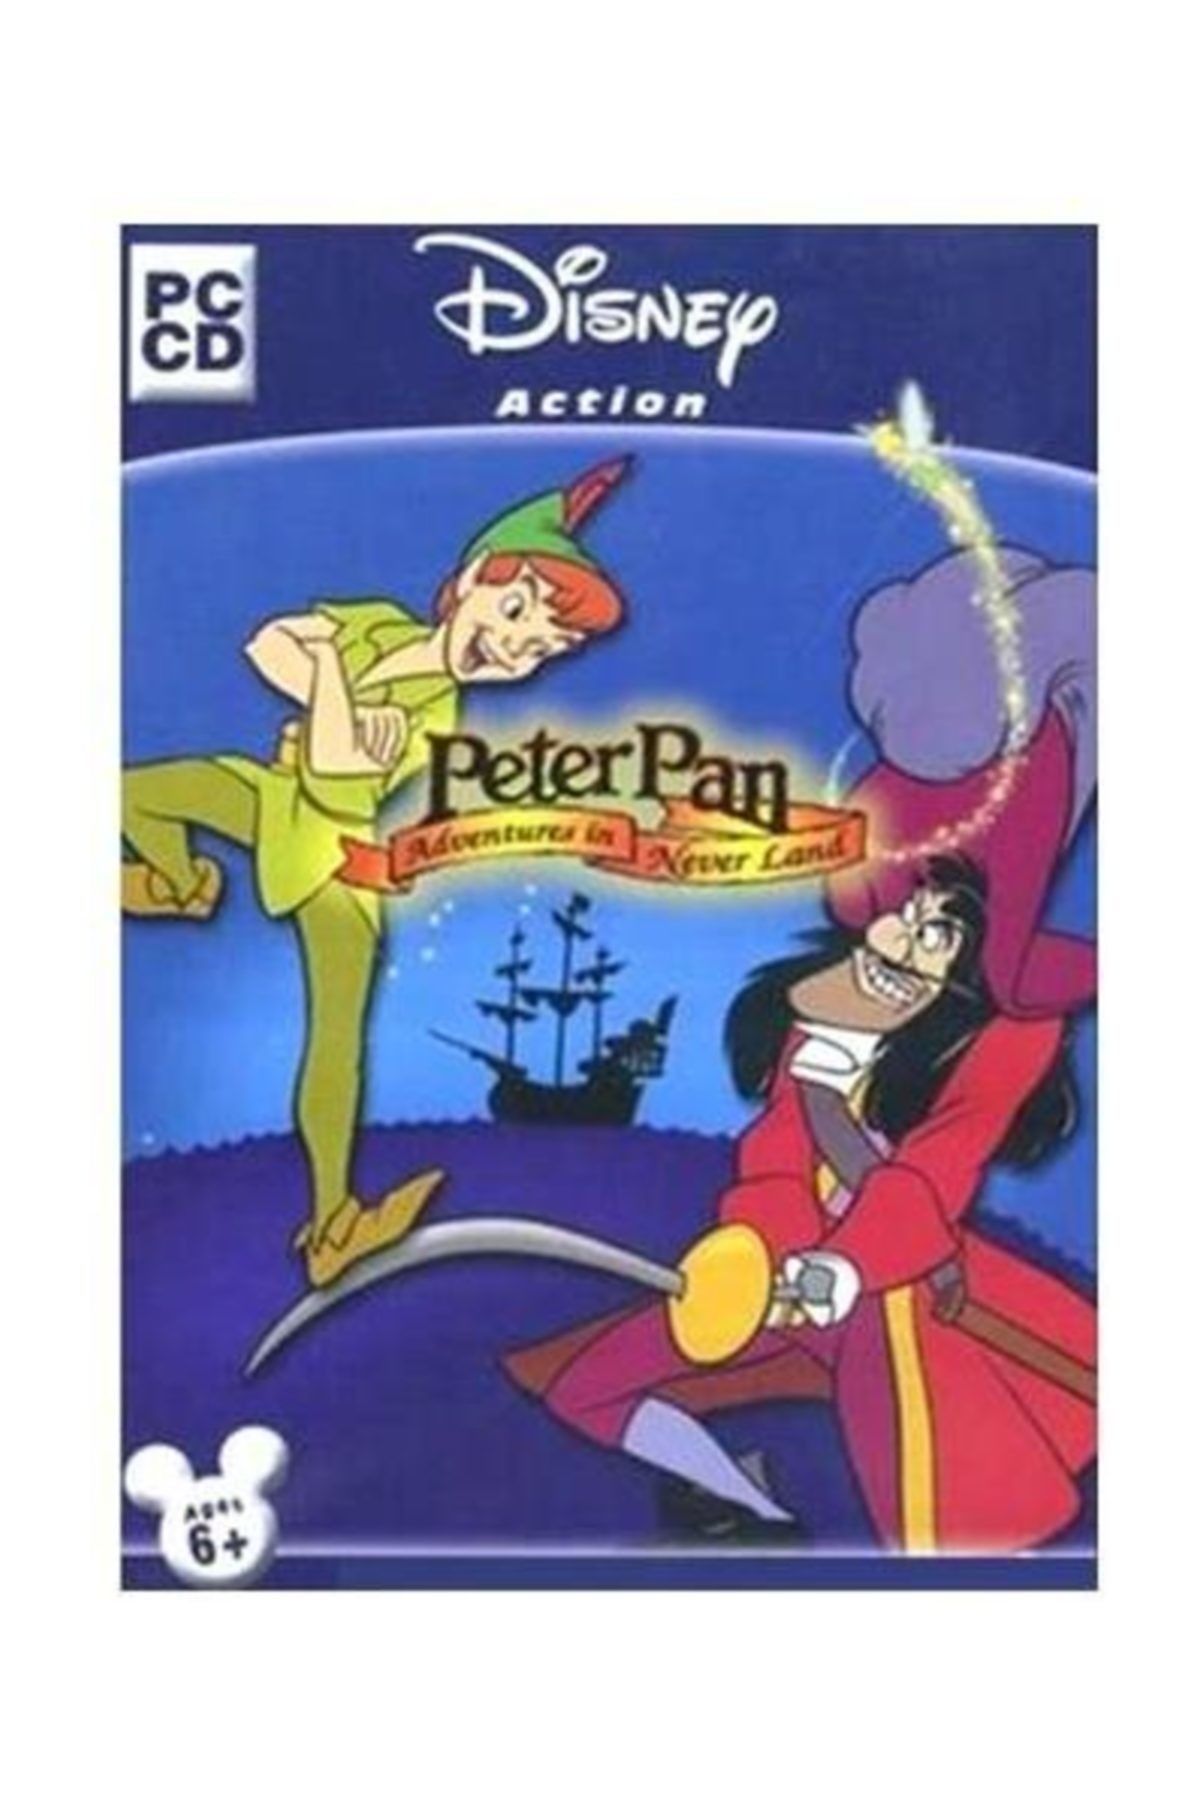 Genel Markalar Disney Peter Pan Varolmayan Ulke Maceralari- Bilgisayar Oyunu